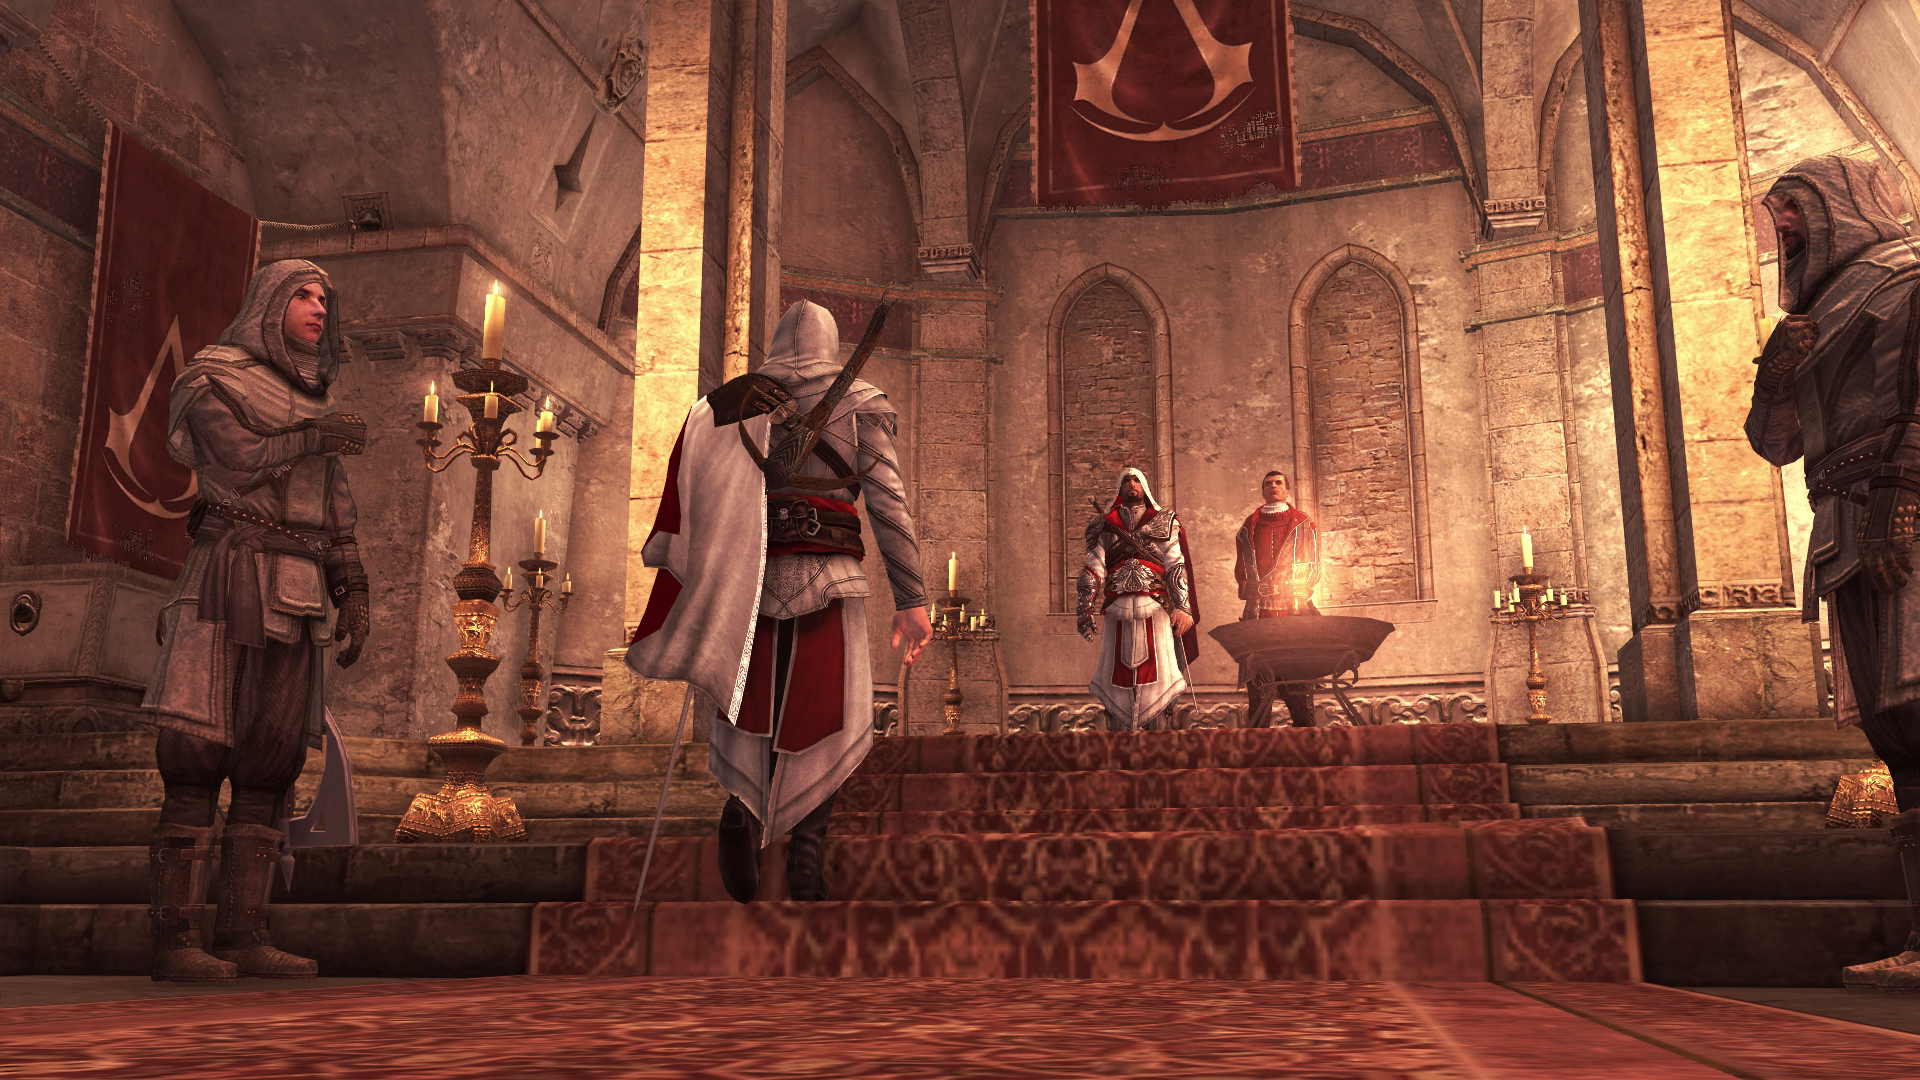 Ассасин крид убежище. Ассасин бразерхуд 4. Эцио братство крови. Assassin's Creed Brotherhood ассасины. Assassin's Creed Brotherhood ассасины рекруты.